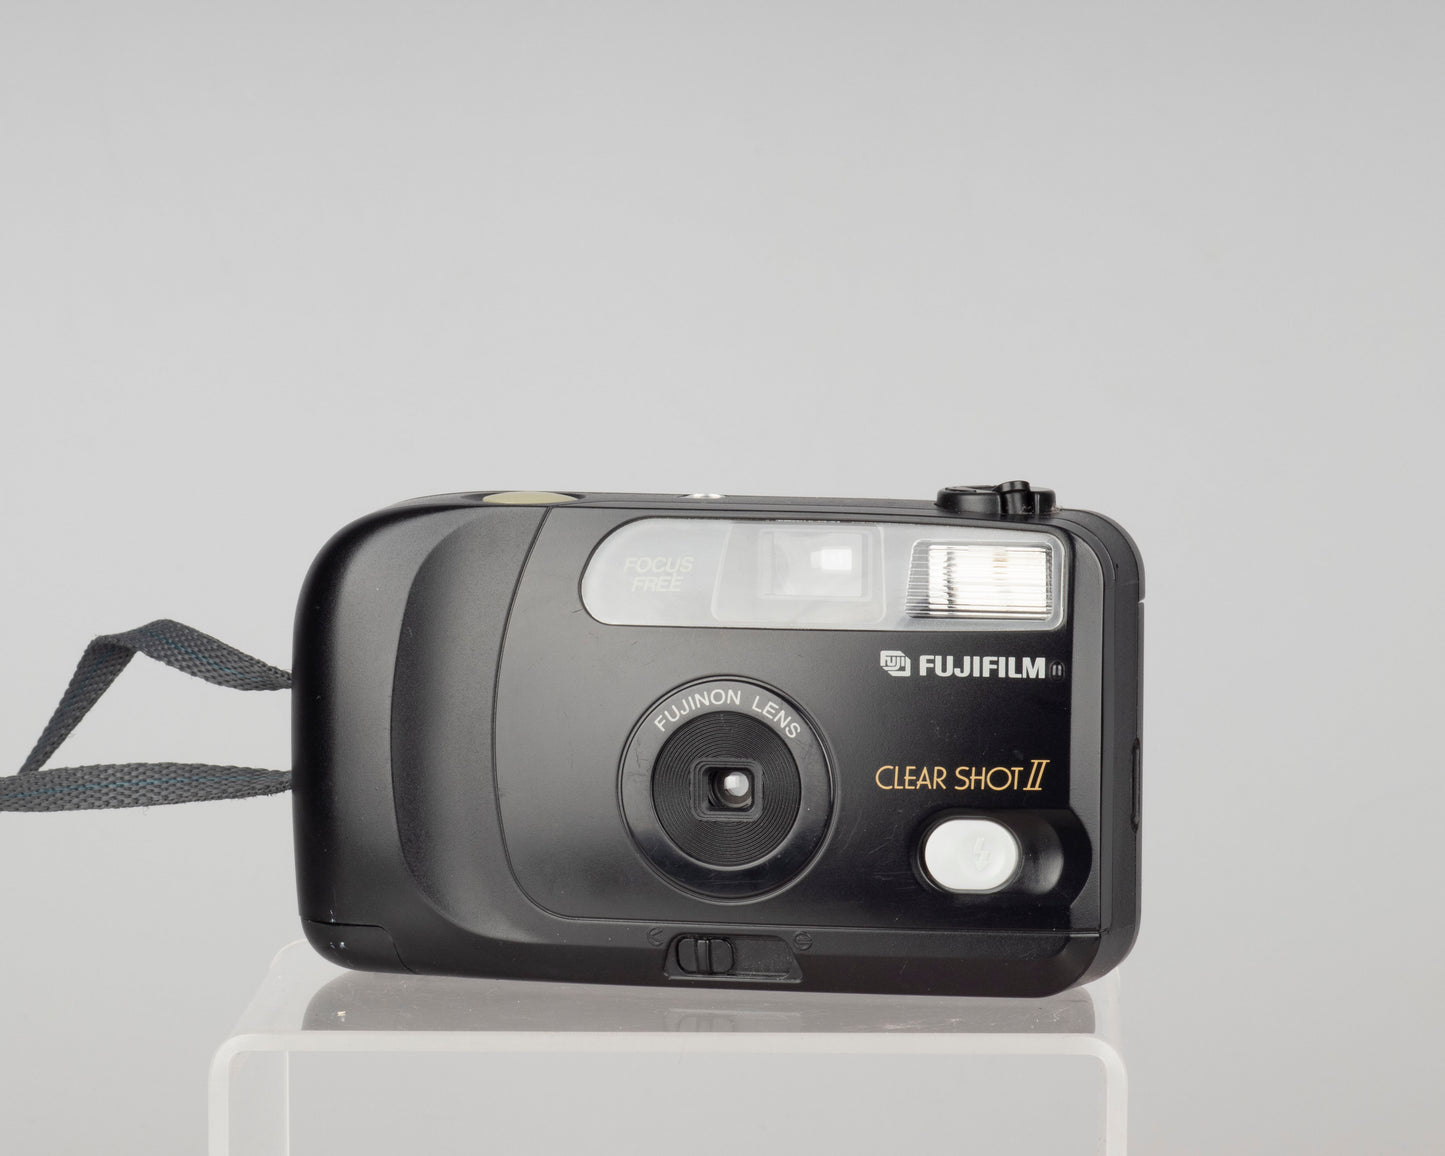 Fujifilm Clear Shot II 35mm film camera